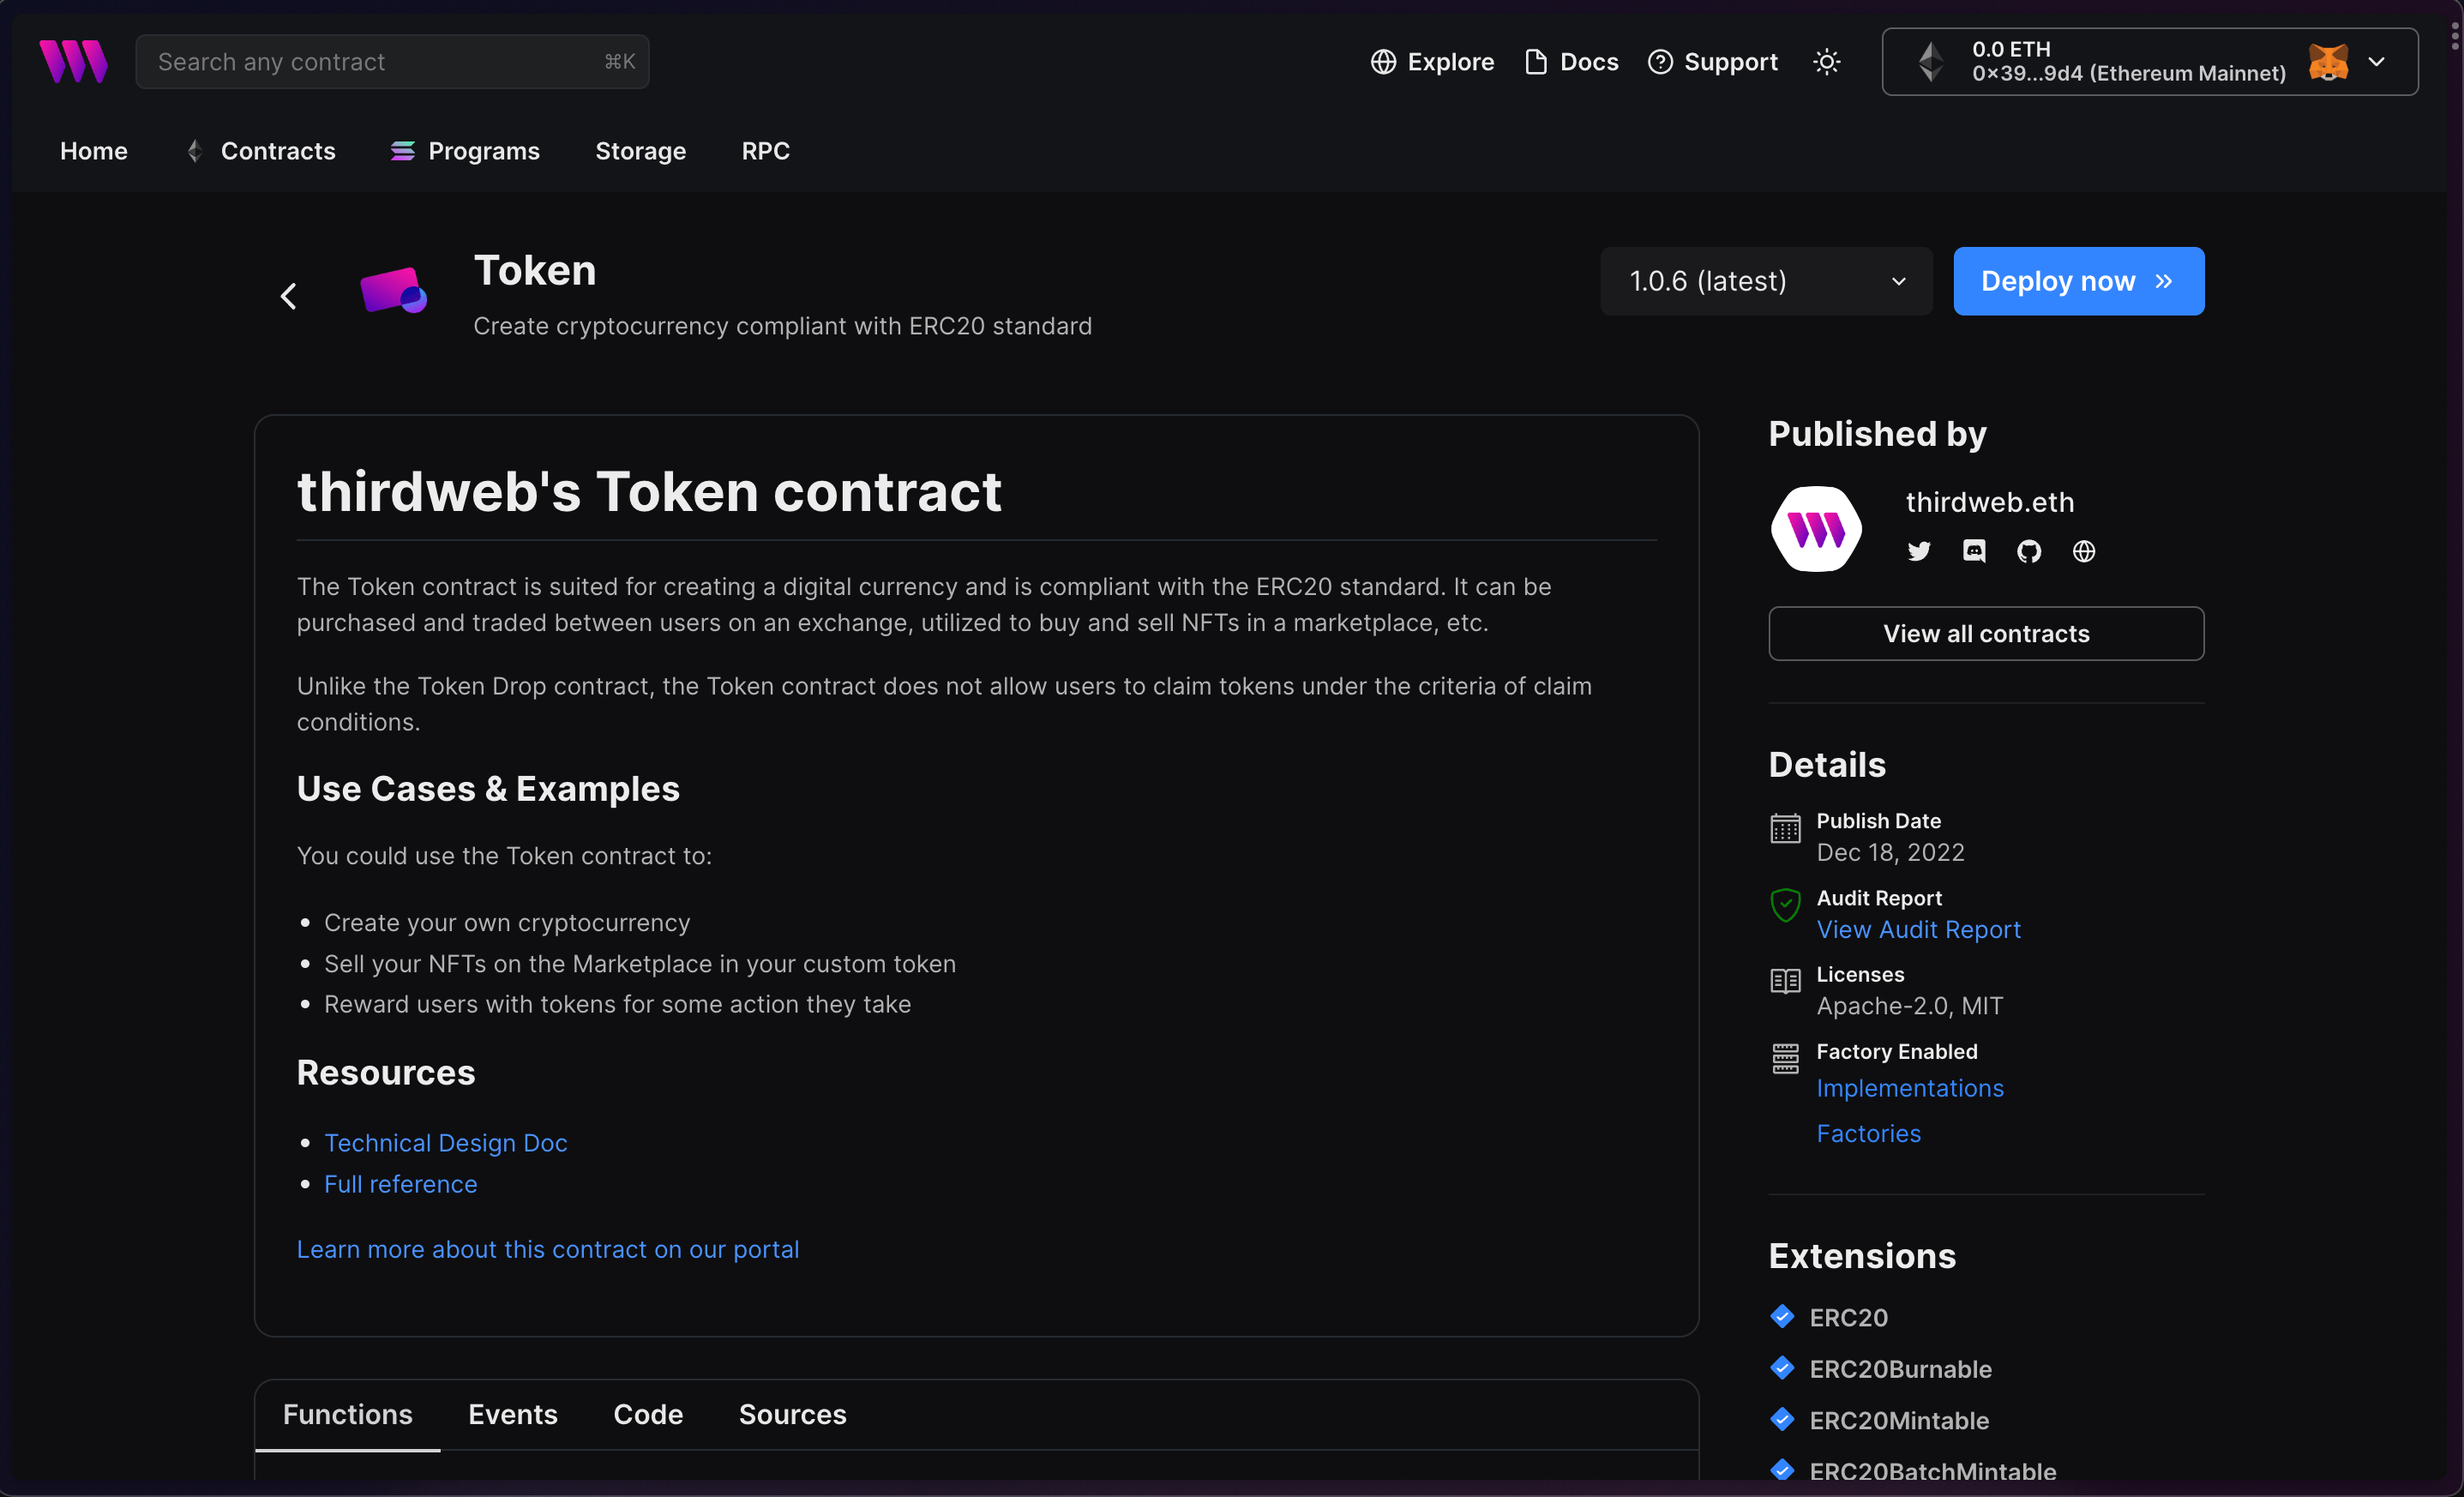 thirdweb's Token Contract